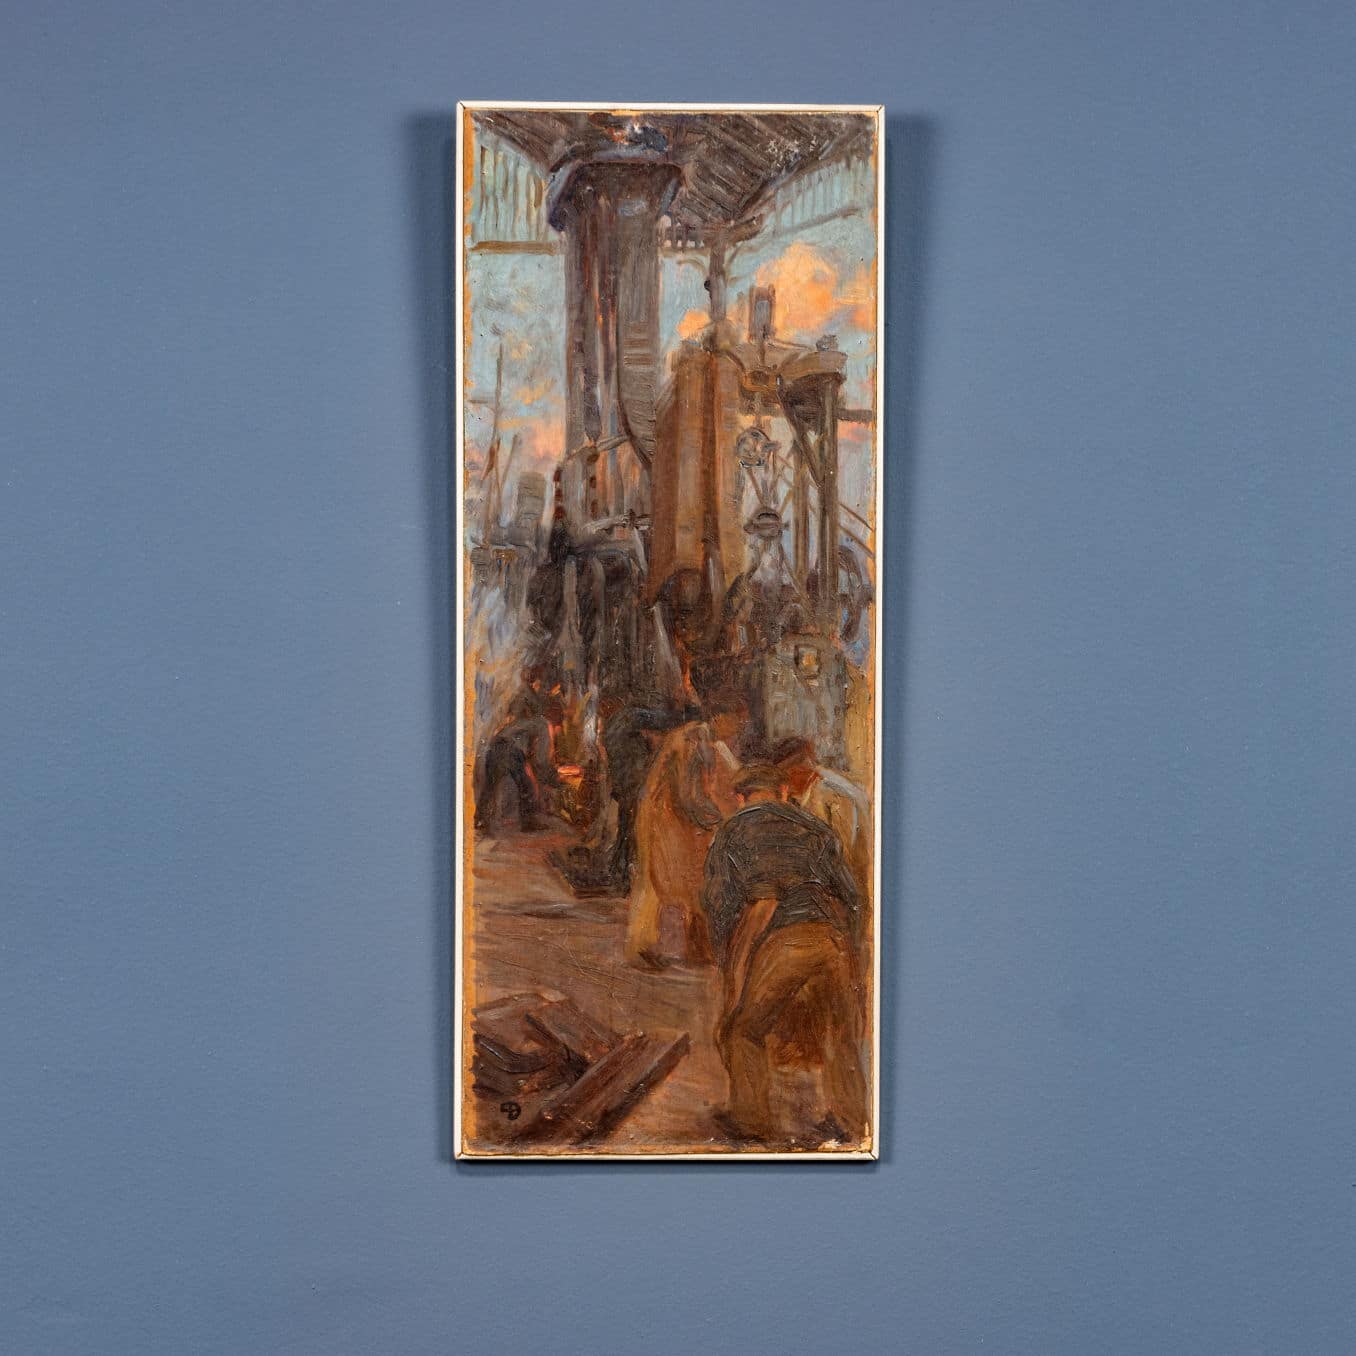 Pieretto Bianco – The awakening of Venice, series of paintings